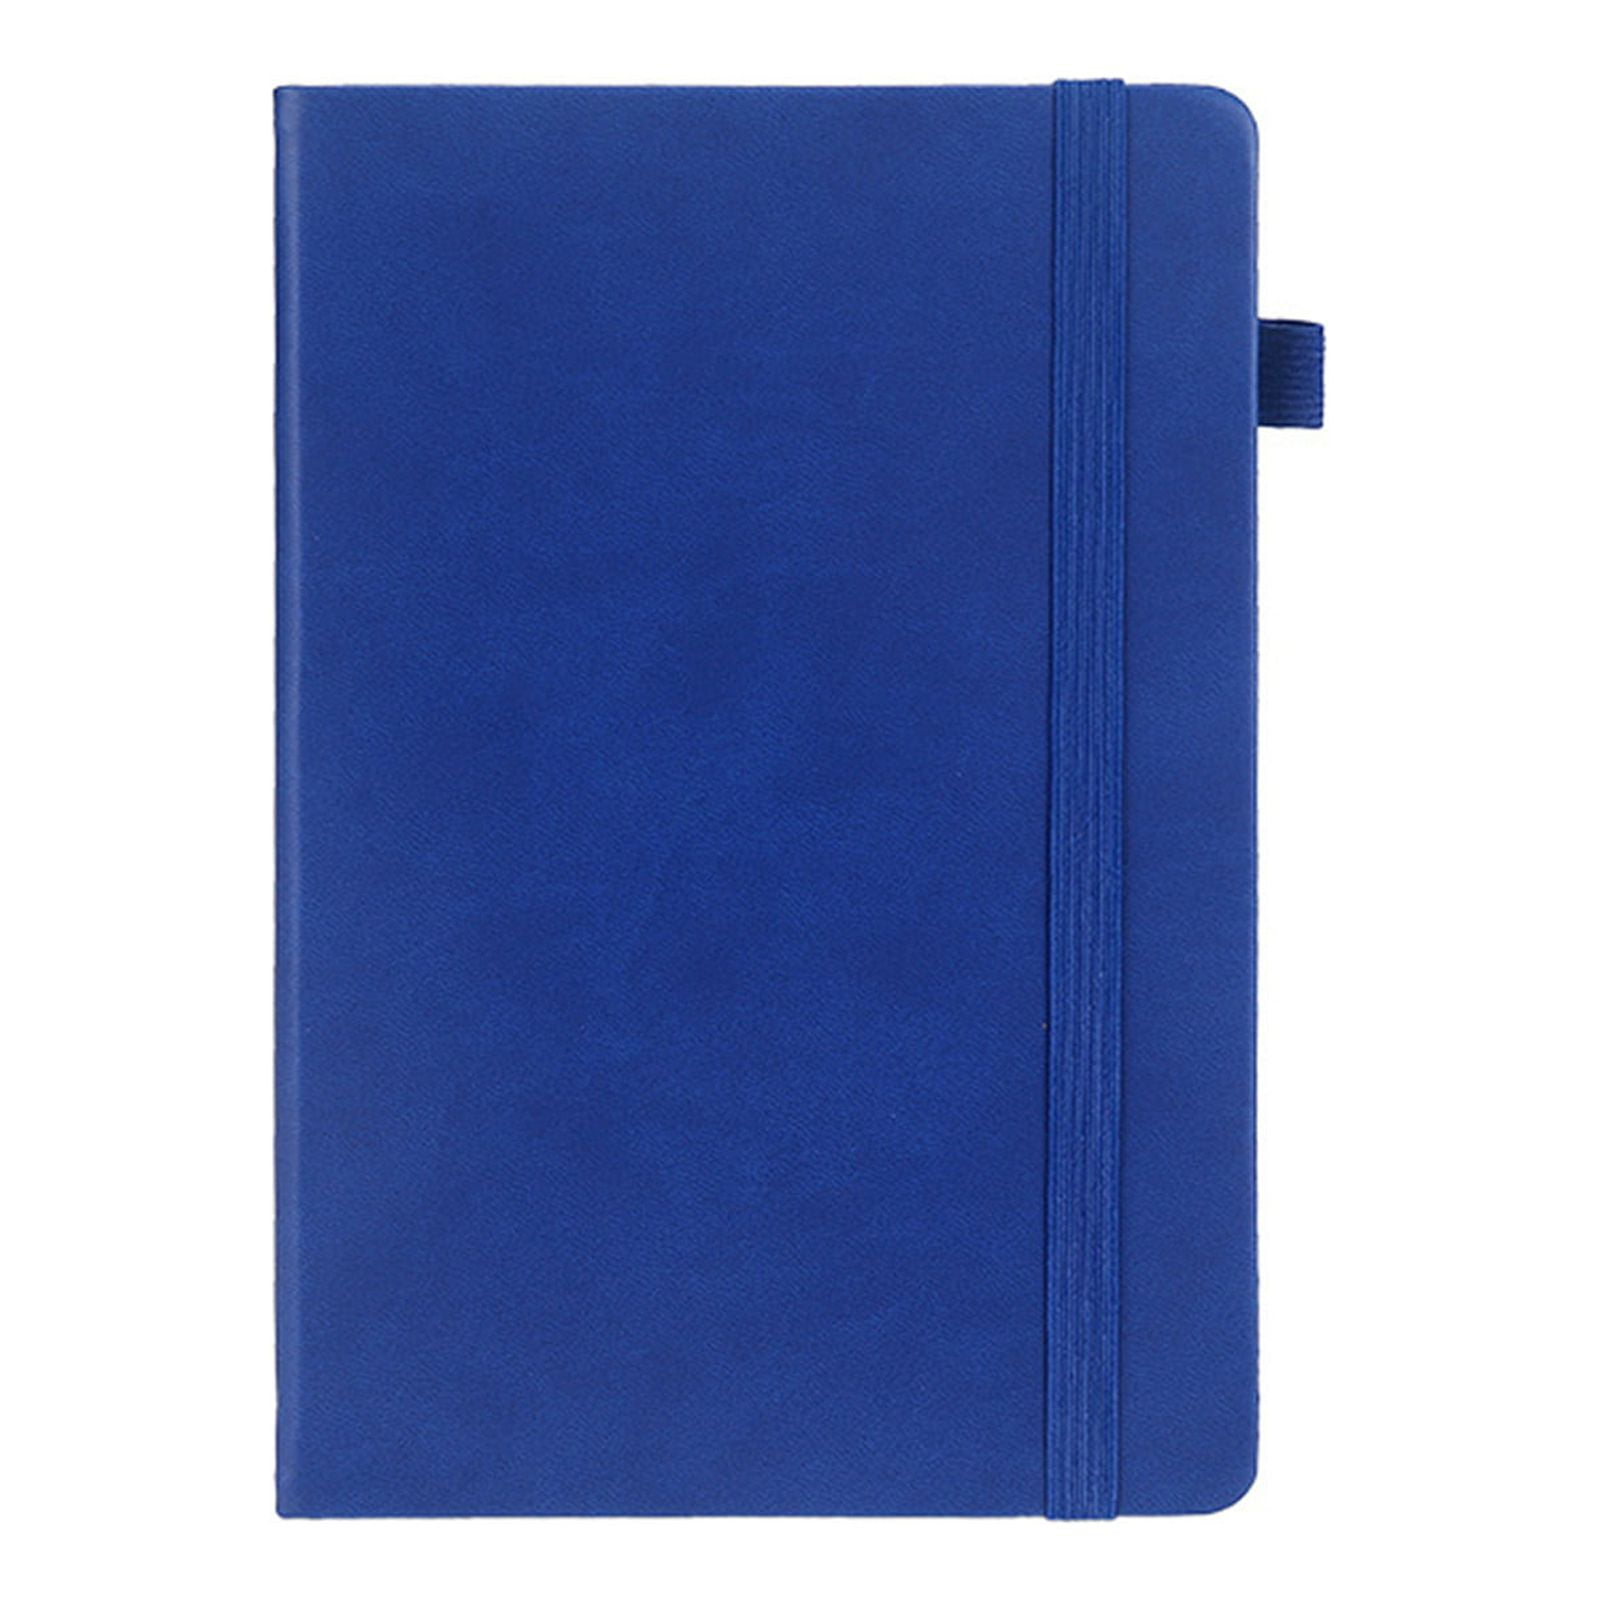 SDJMa Lined Journal Notebook, A5 size, 8.4